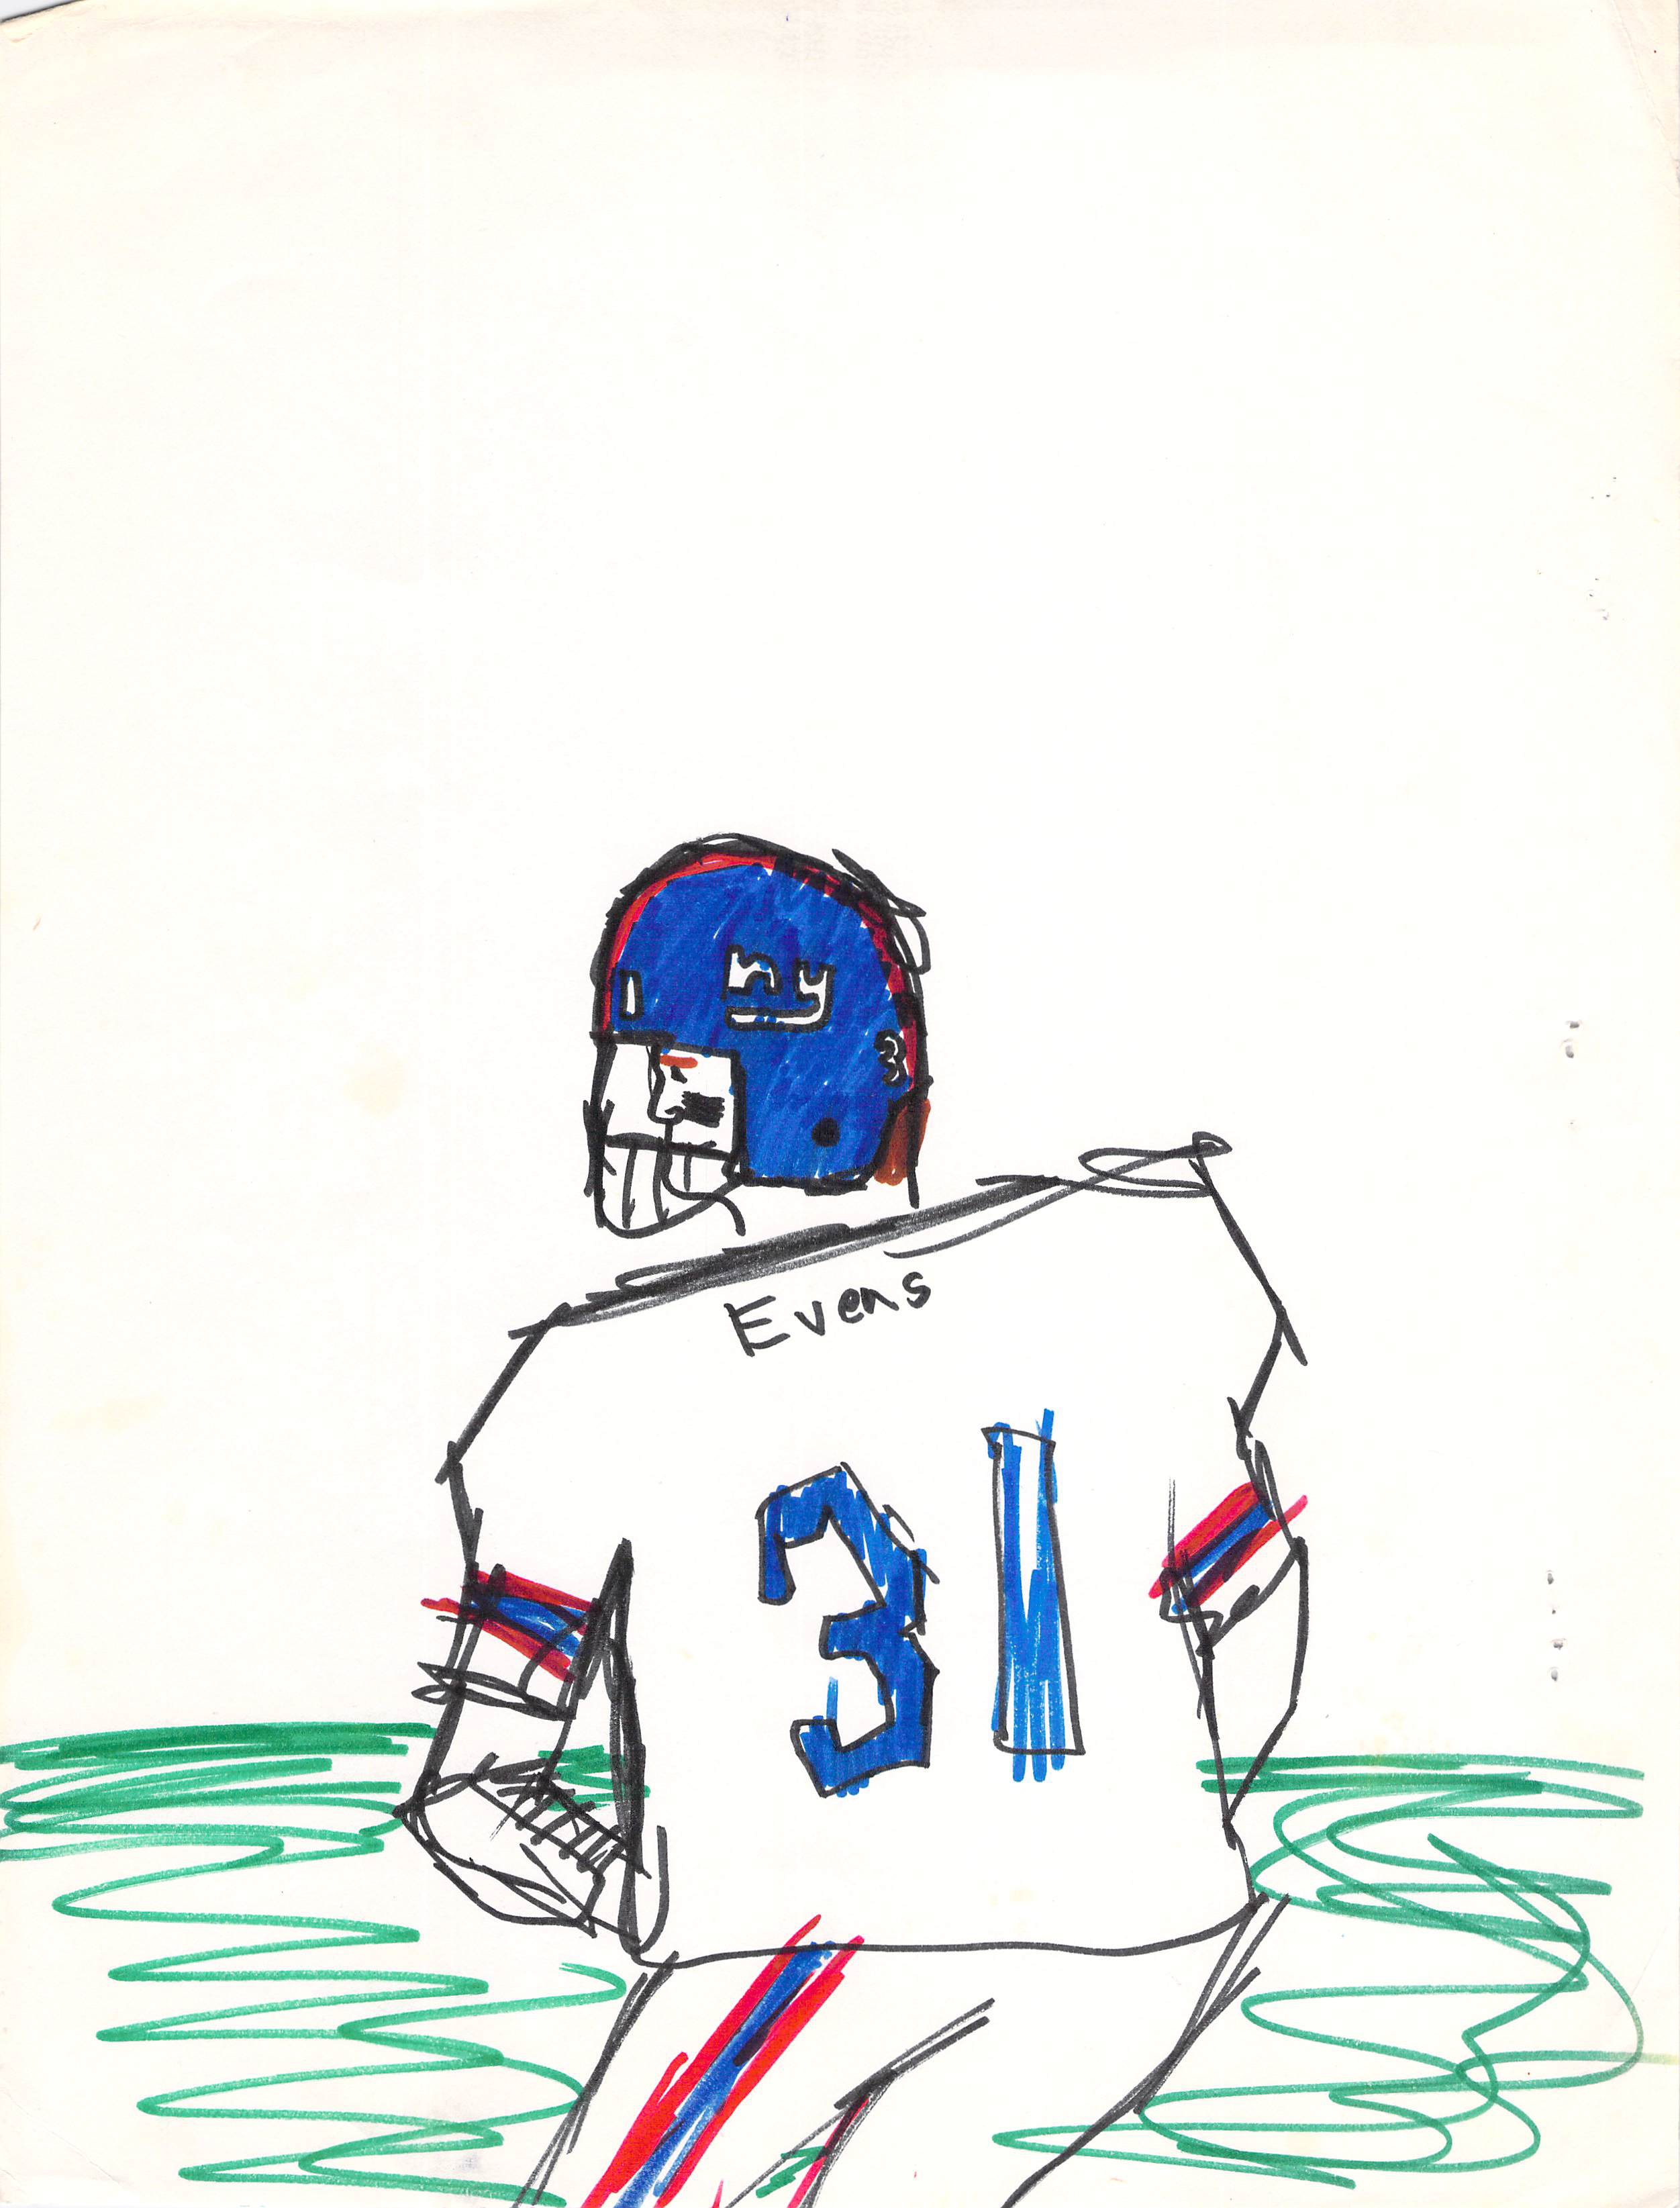 Sketch, Art, Portrait, Football, New York Giants